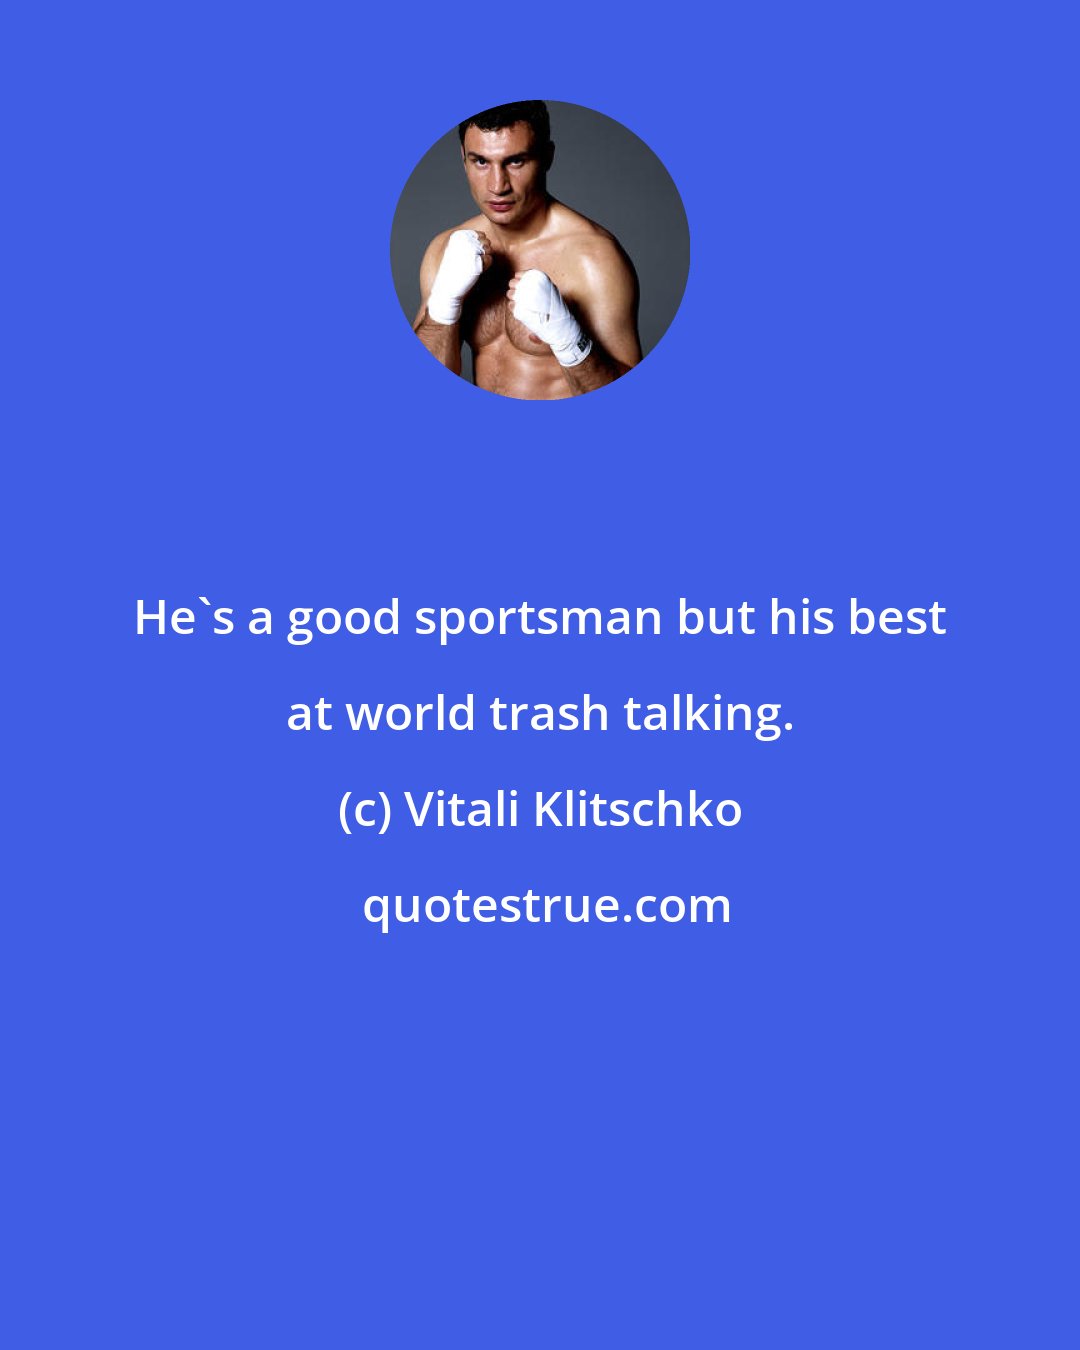 Vitali Klitschko: He's a good sportsman but his best at world trash talking.